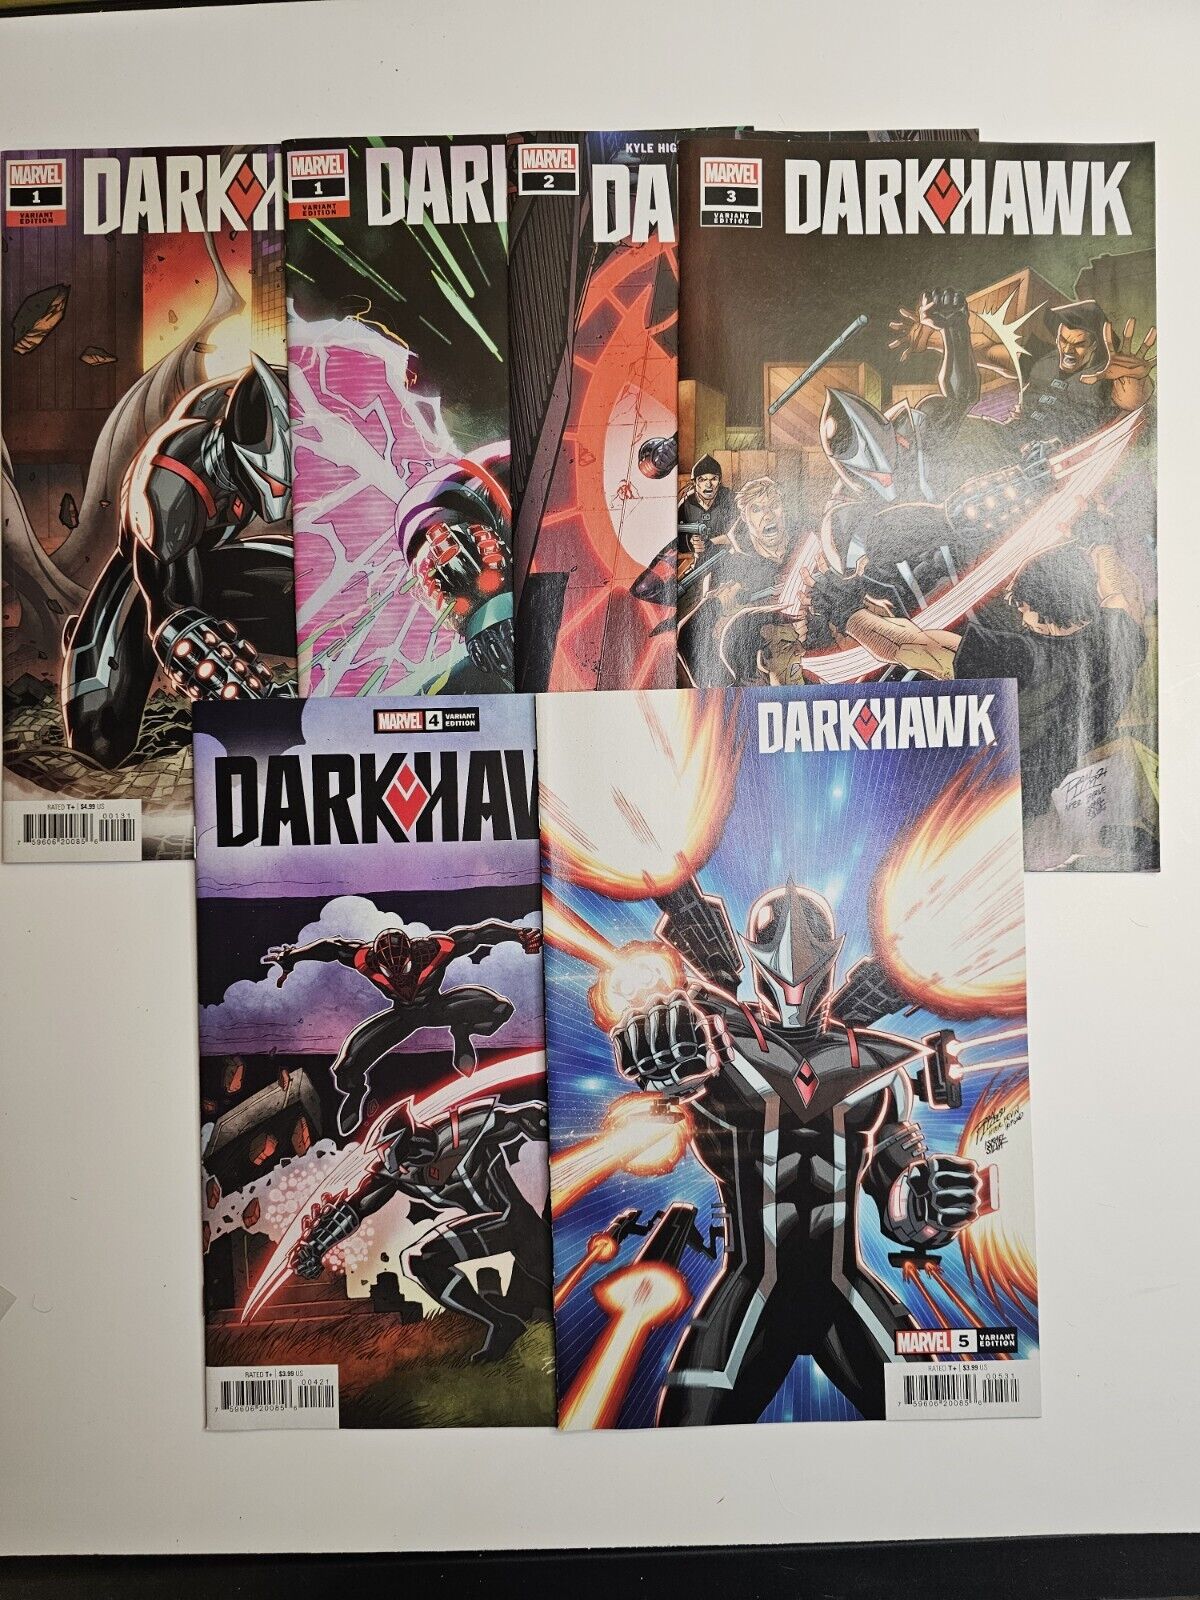 Darkhawk #1-5 Variant Complete Series 6 Book Set Marvel Comics (2021)